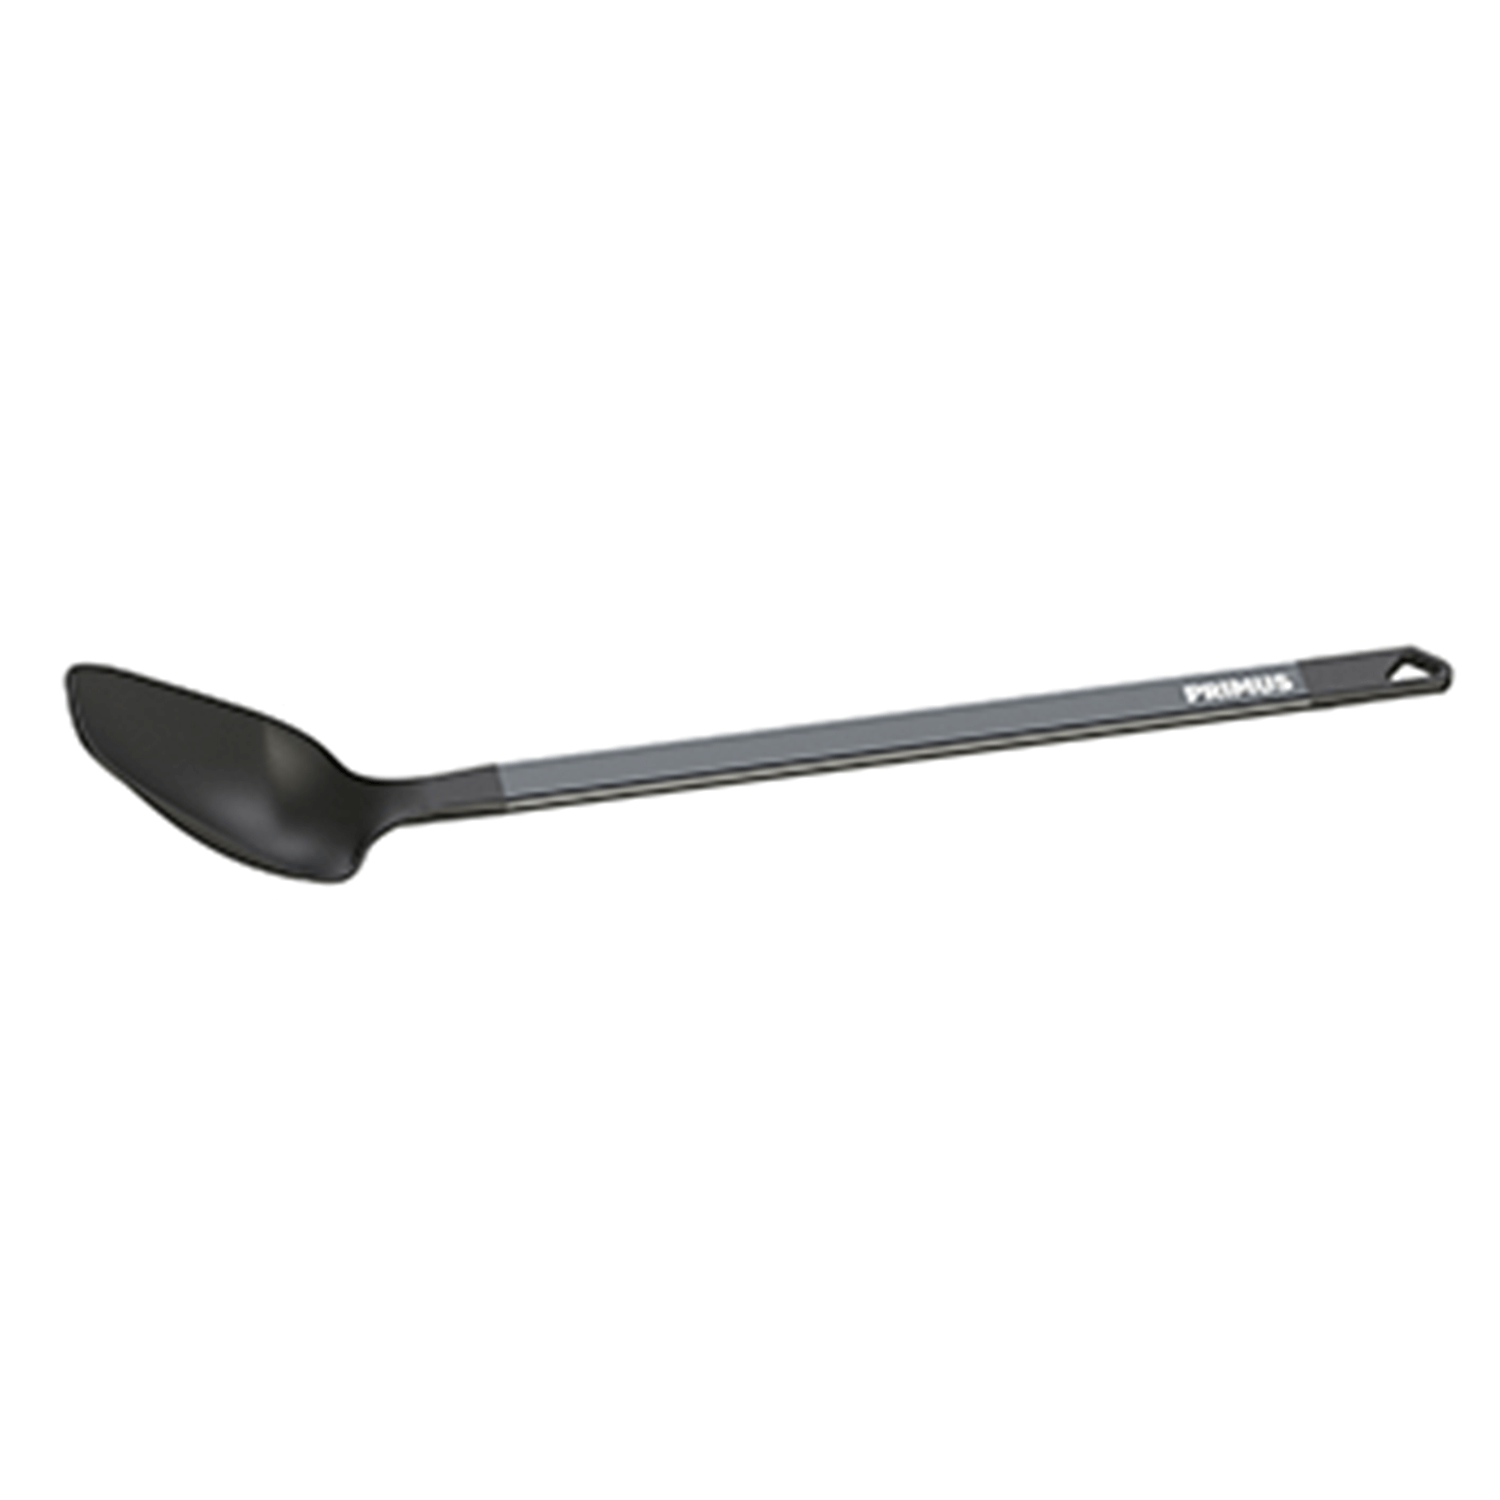 Primus Long Spoon